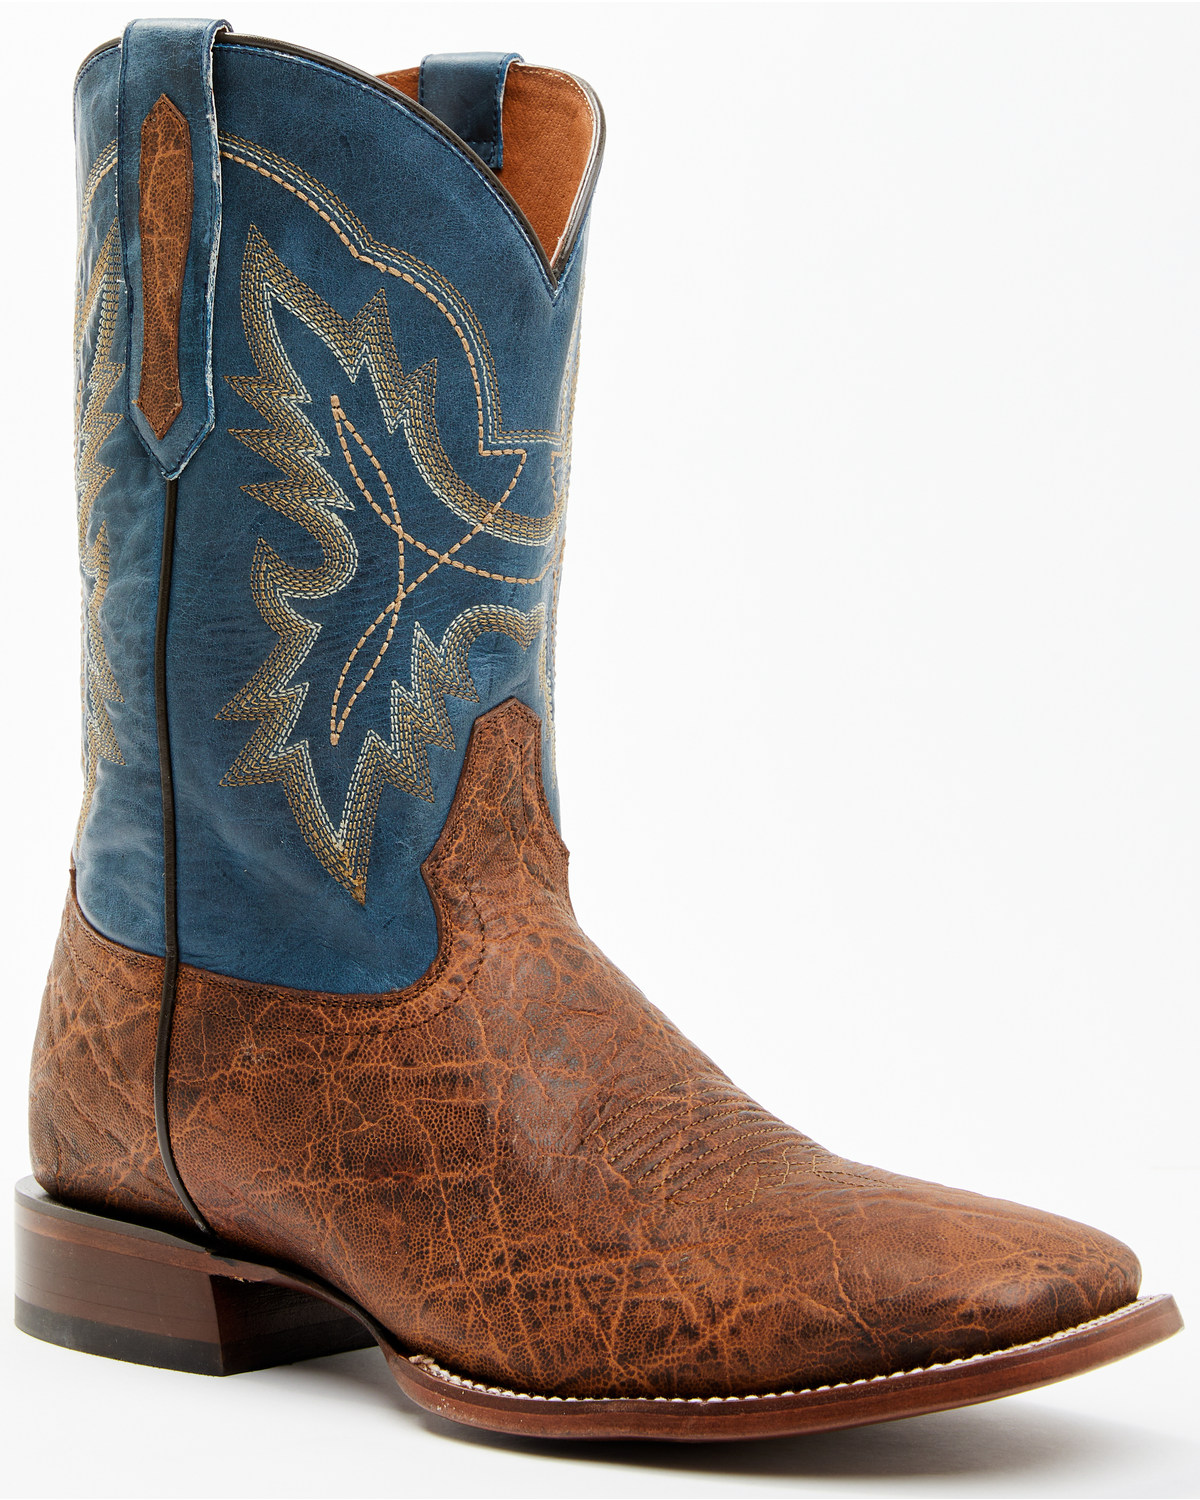 Cody James Men's Blue Elephant Print Western Boots - Broad Square Toe